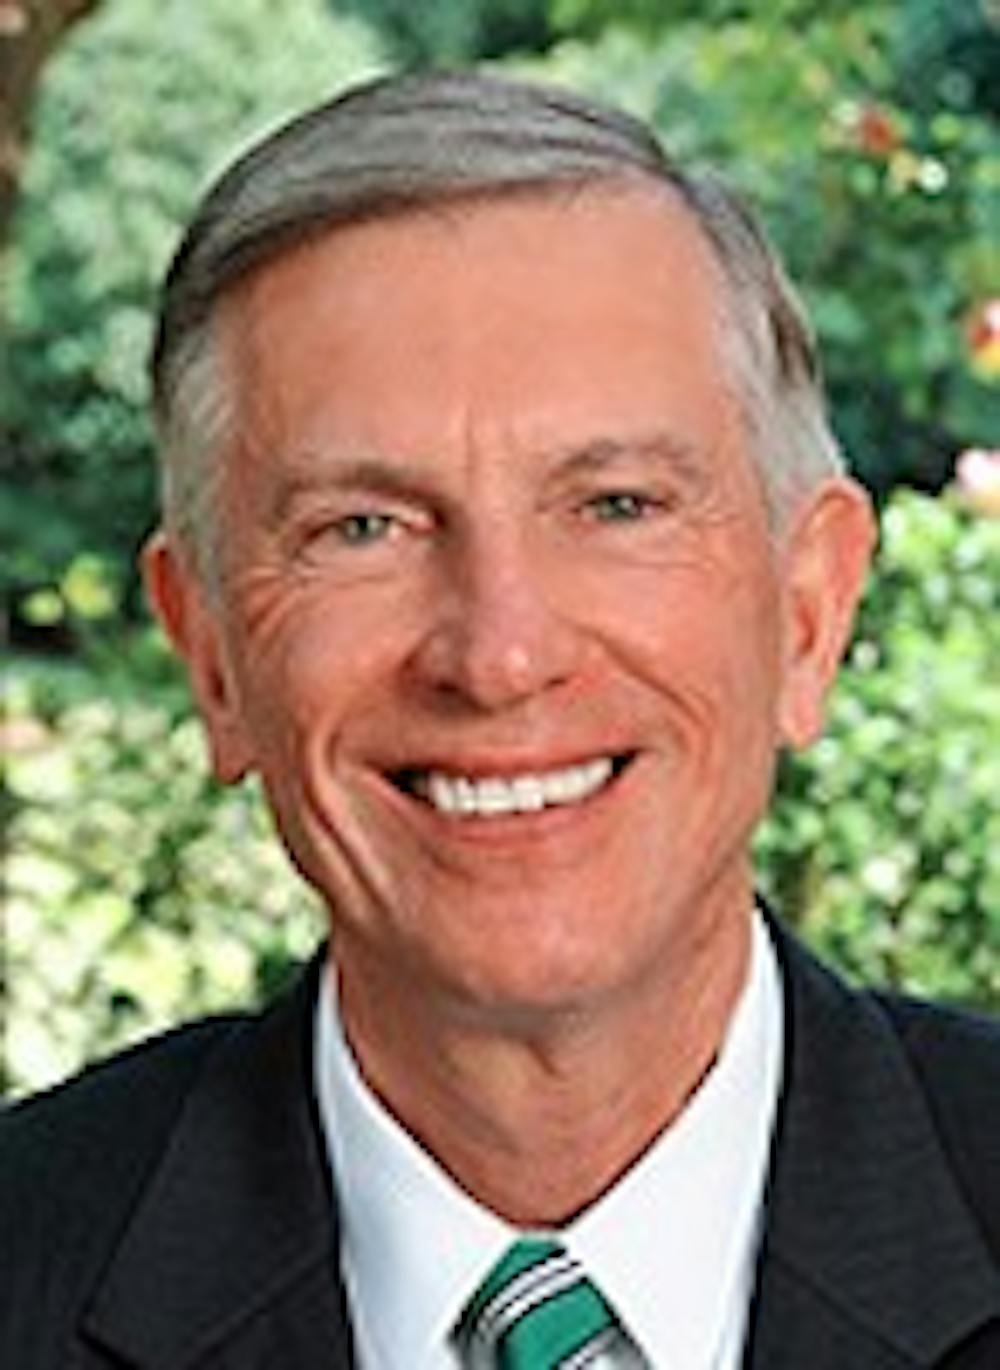 Tom Ross, President of the University of North Carolina 